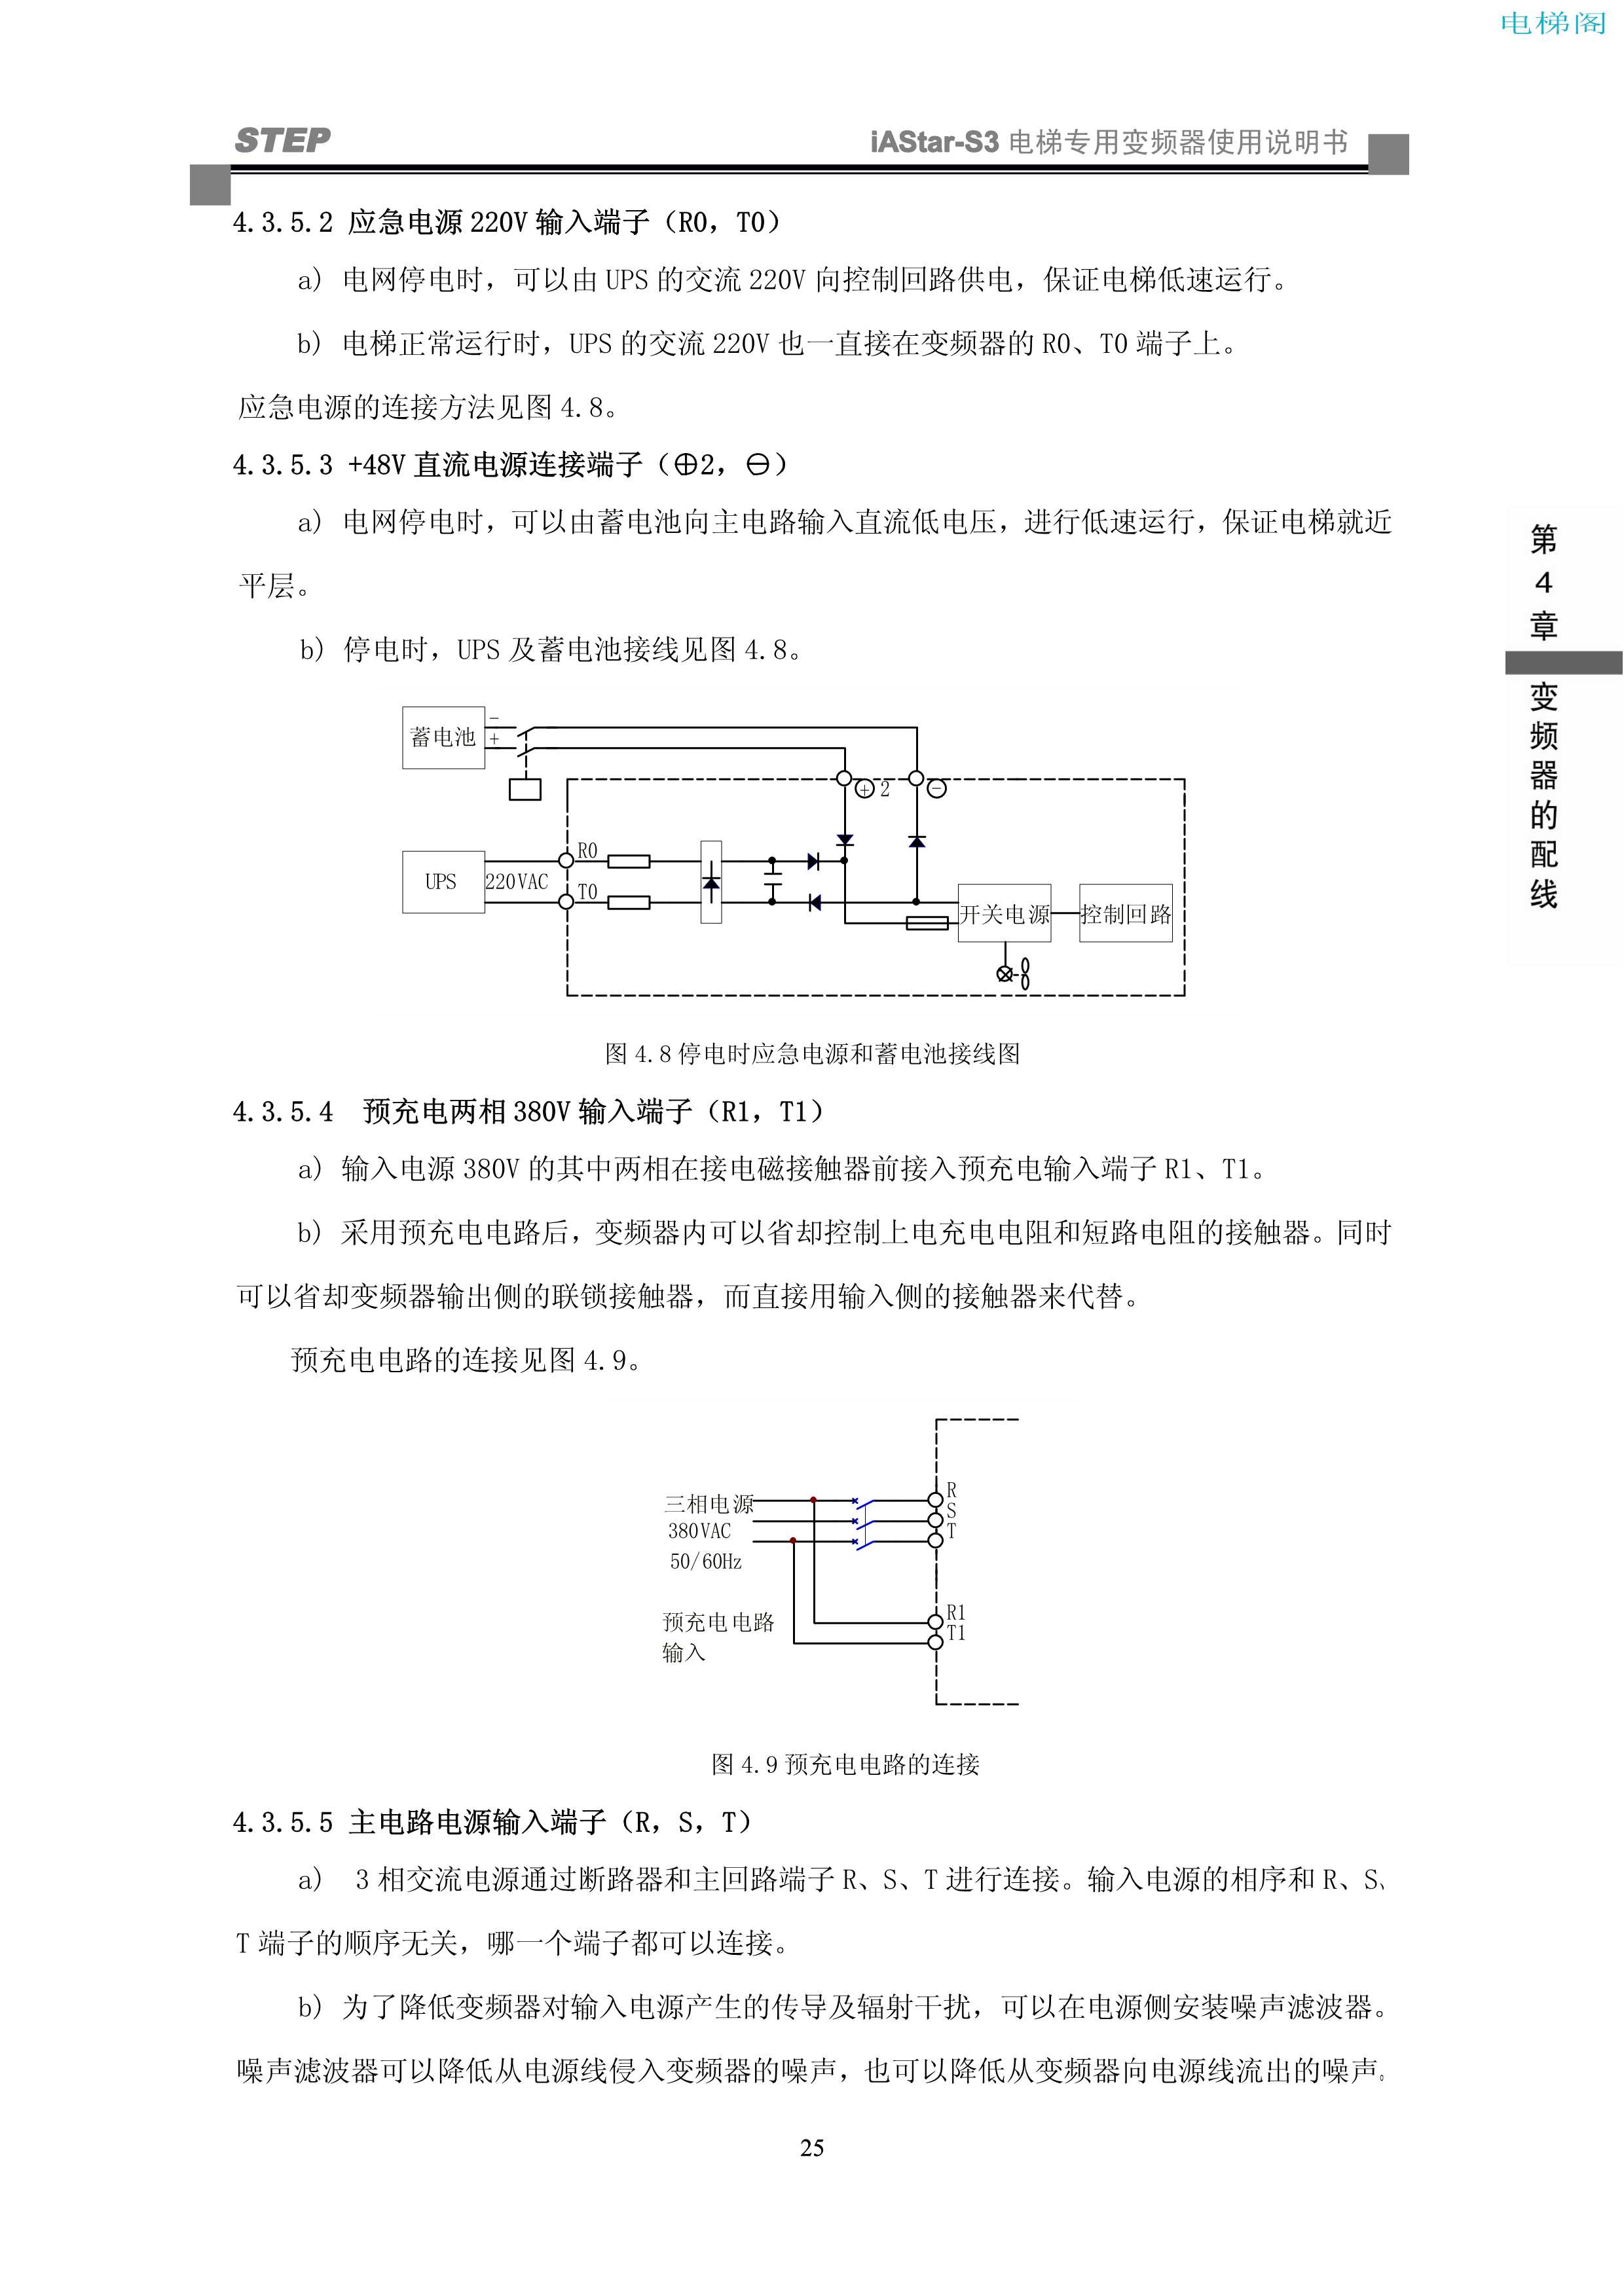 iAStar-S3系列电梯专用变频器使用说明书-9(V2[1].03)_33.jpg